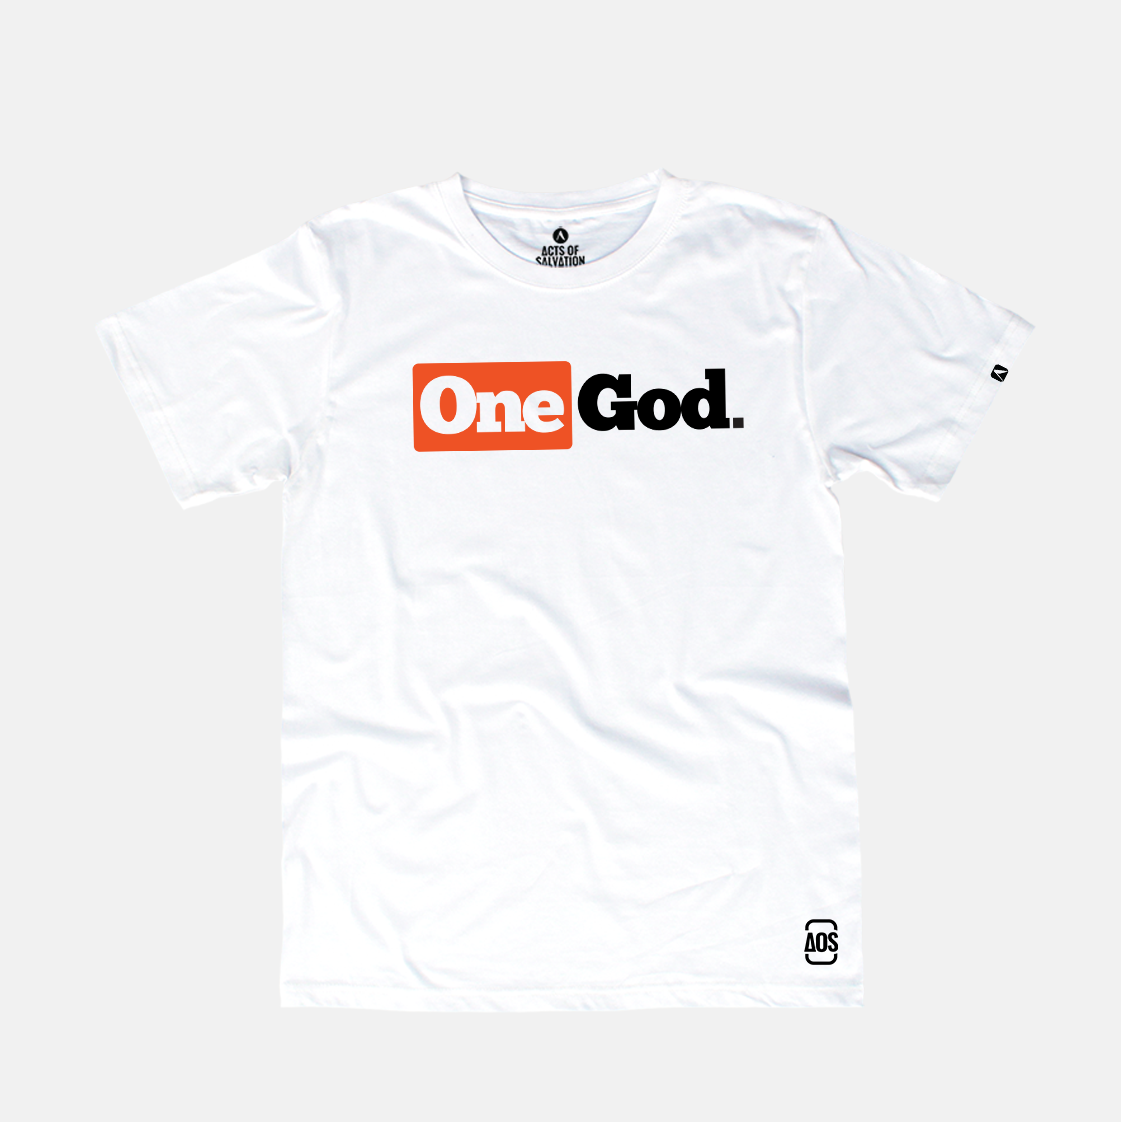 One God. - Tee